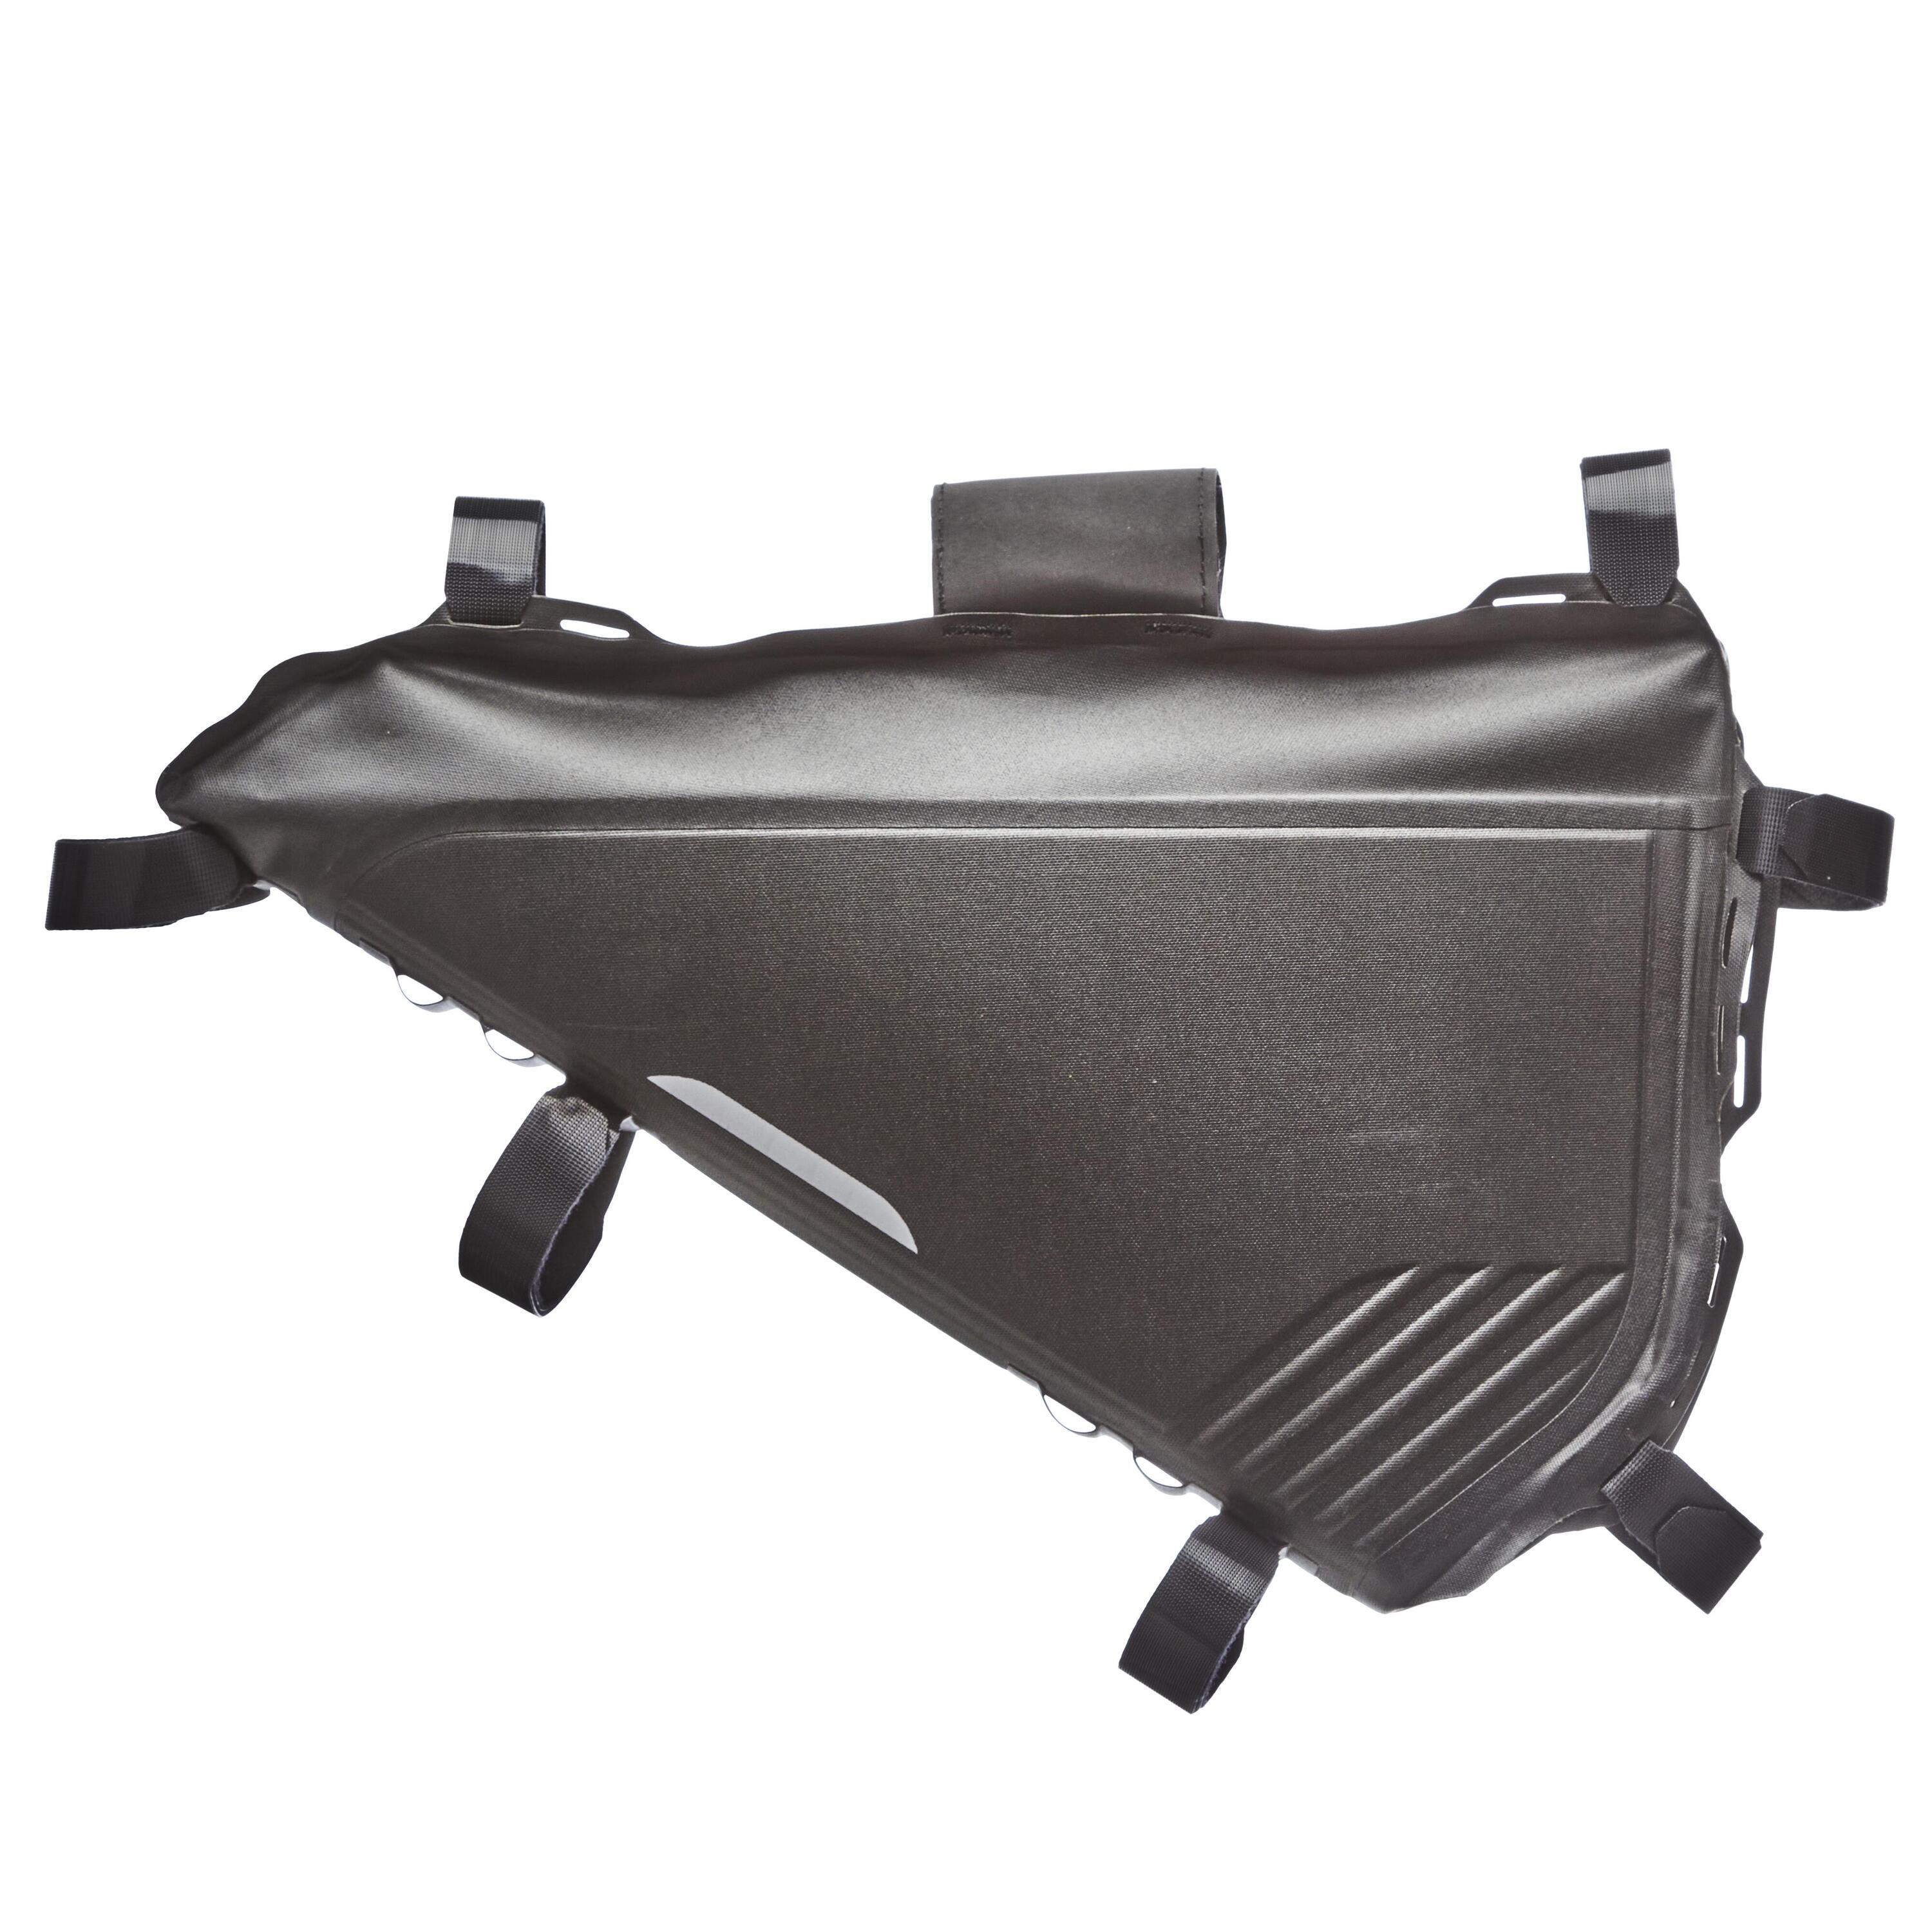 Bikepacking IPX6 Waterproof Size XS/S Full Frame Roll-Top Bag 6/7